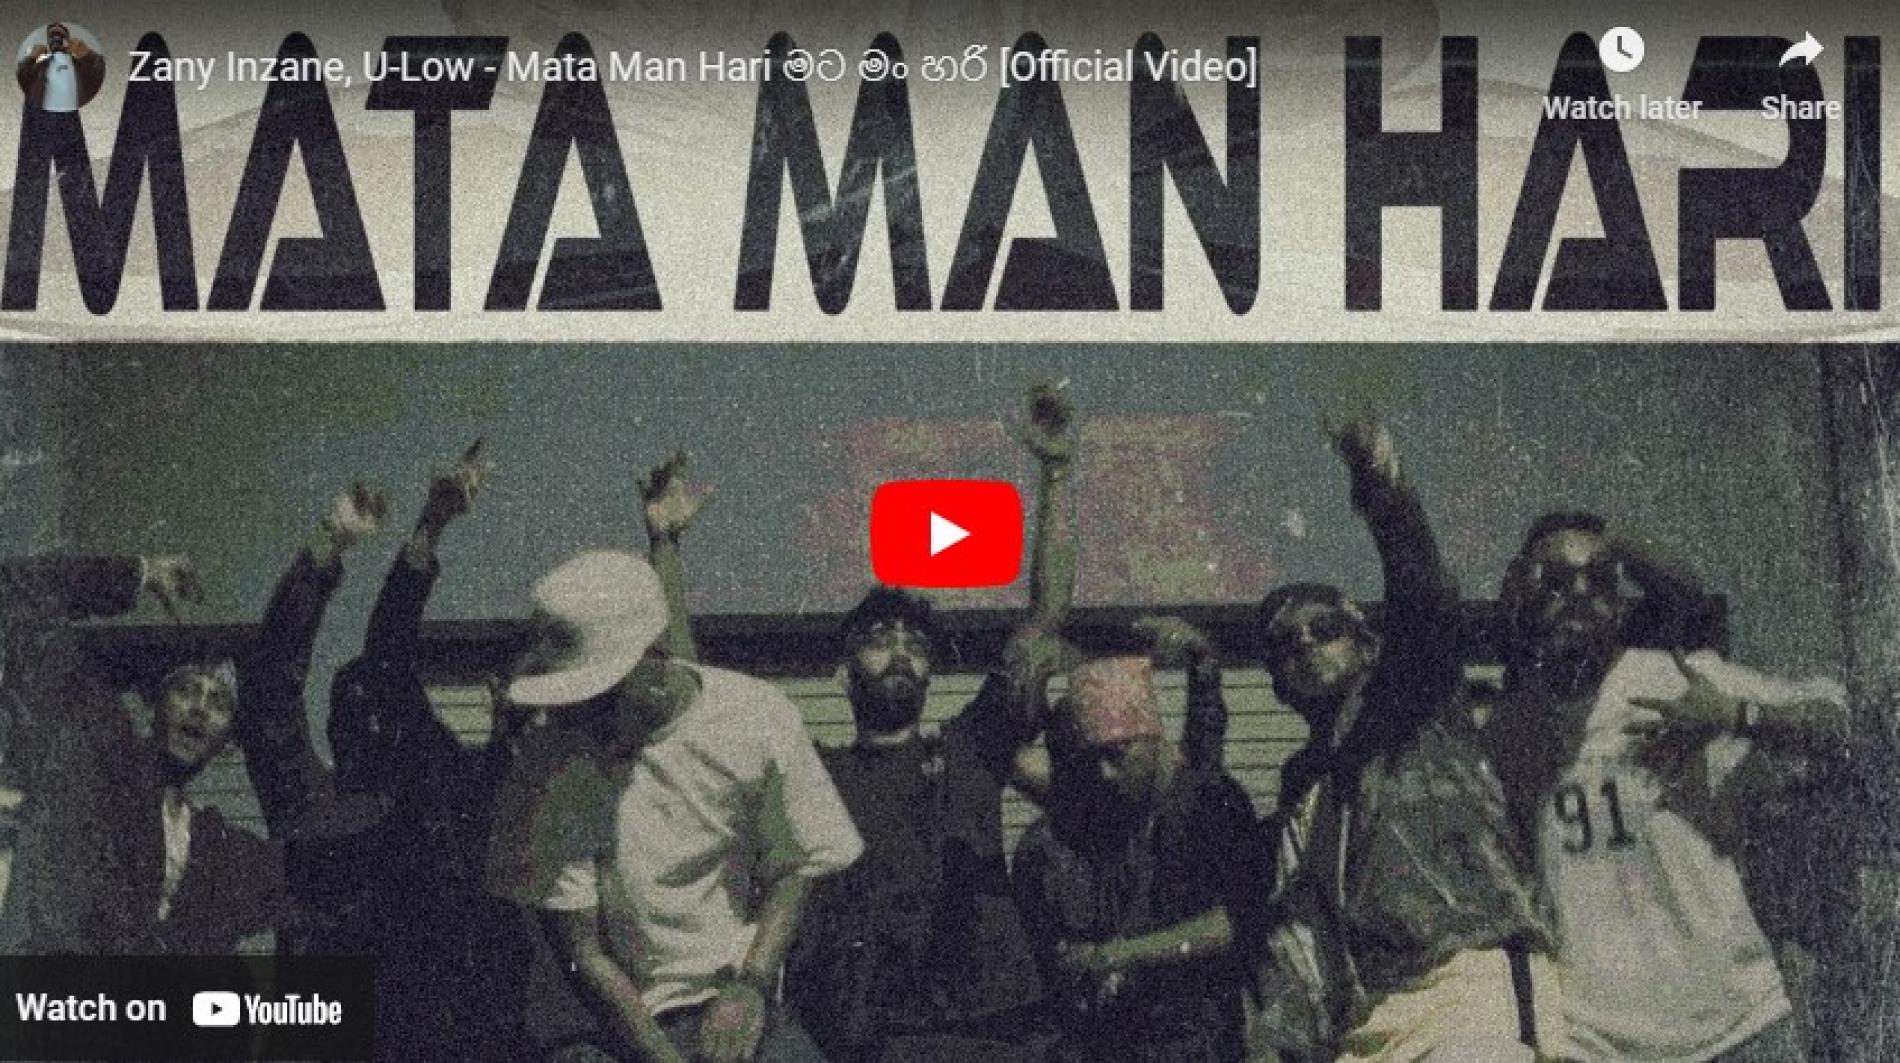 New Music : Zany Inzane, U-Low – Mata Man Hari මට මං හරි [Official Video]